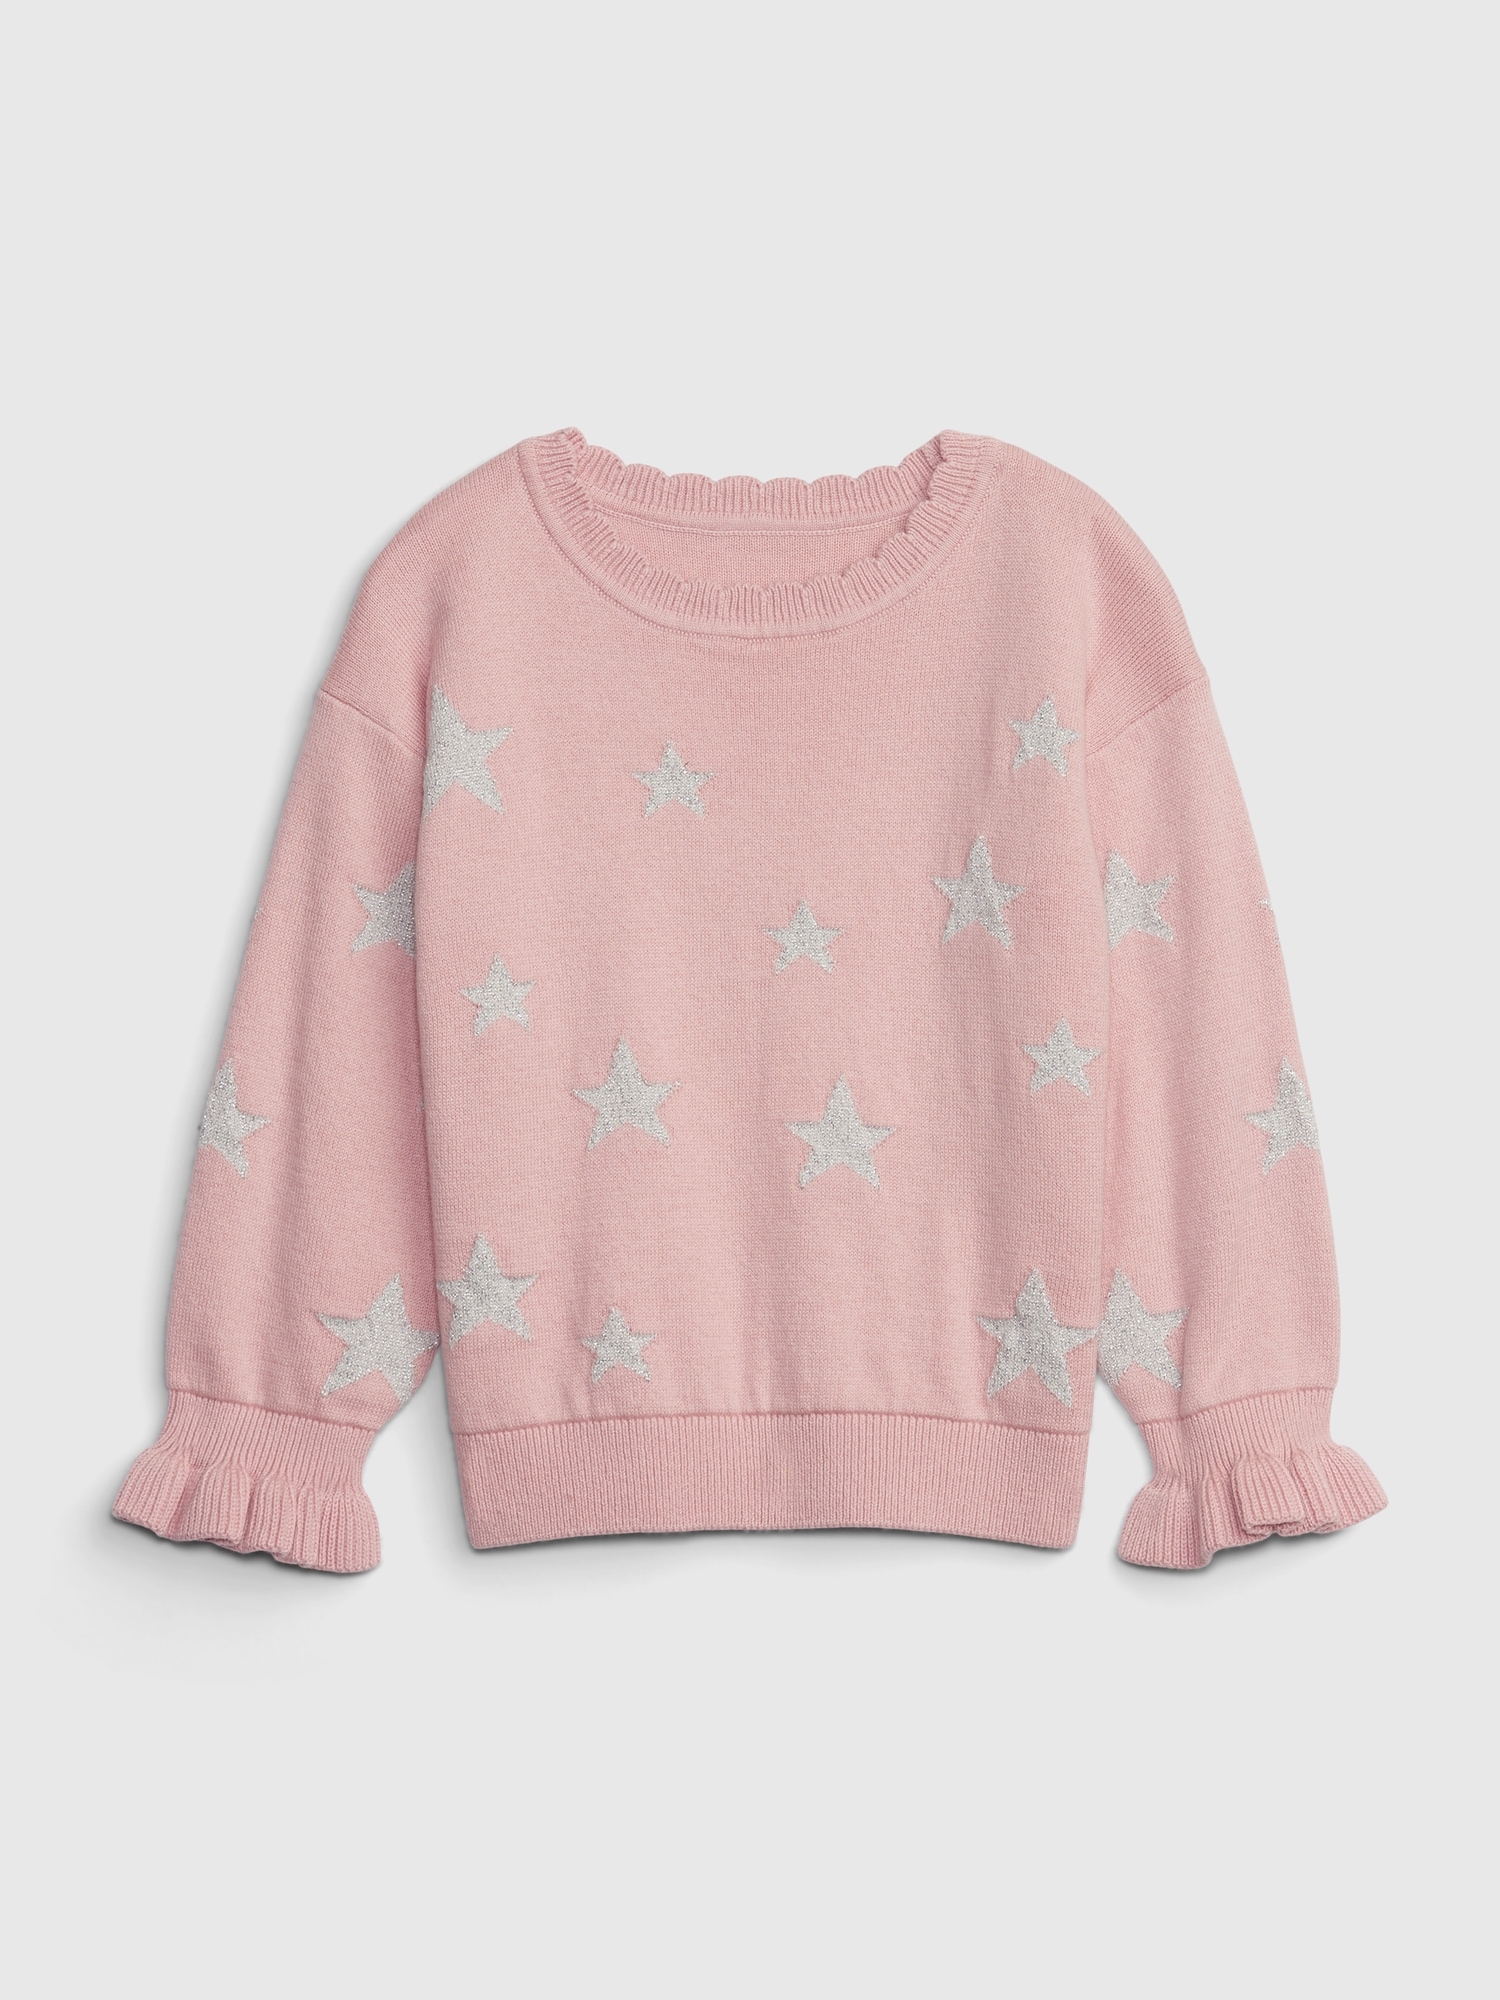 Toddler Ruffle Sweater